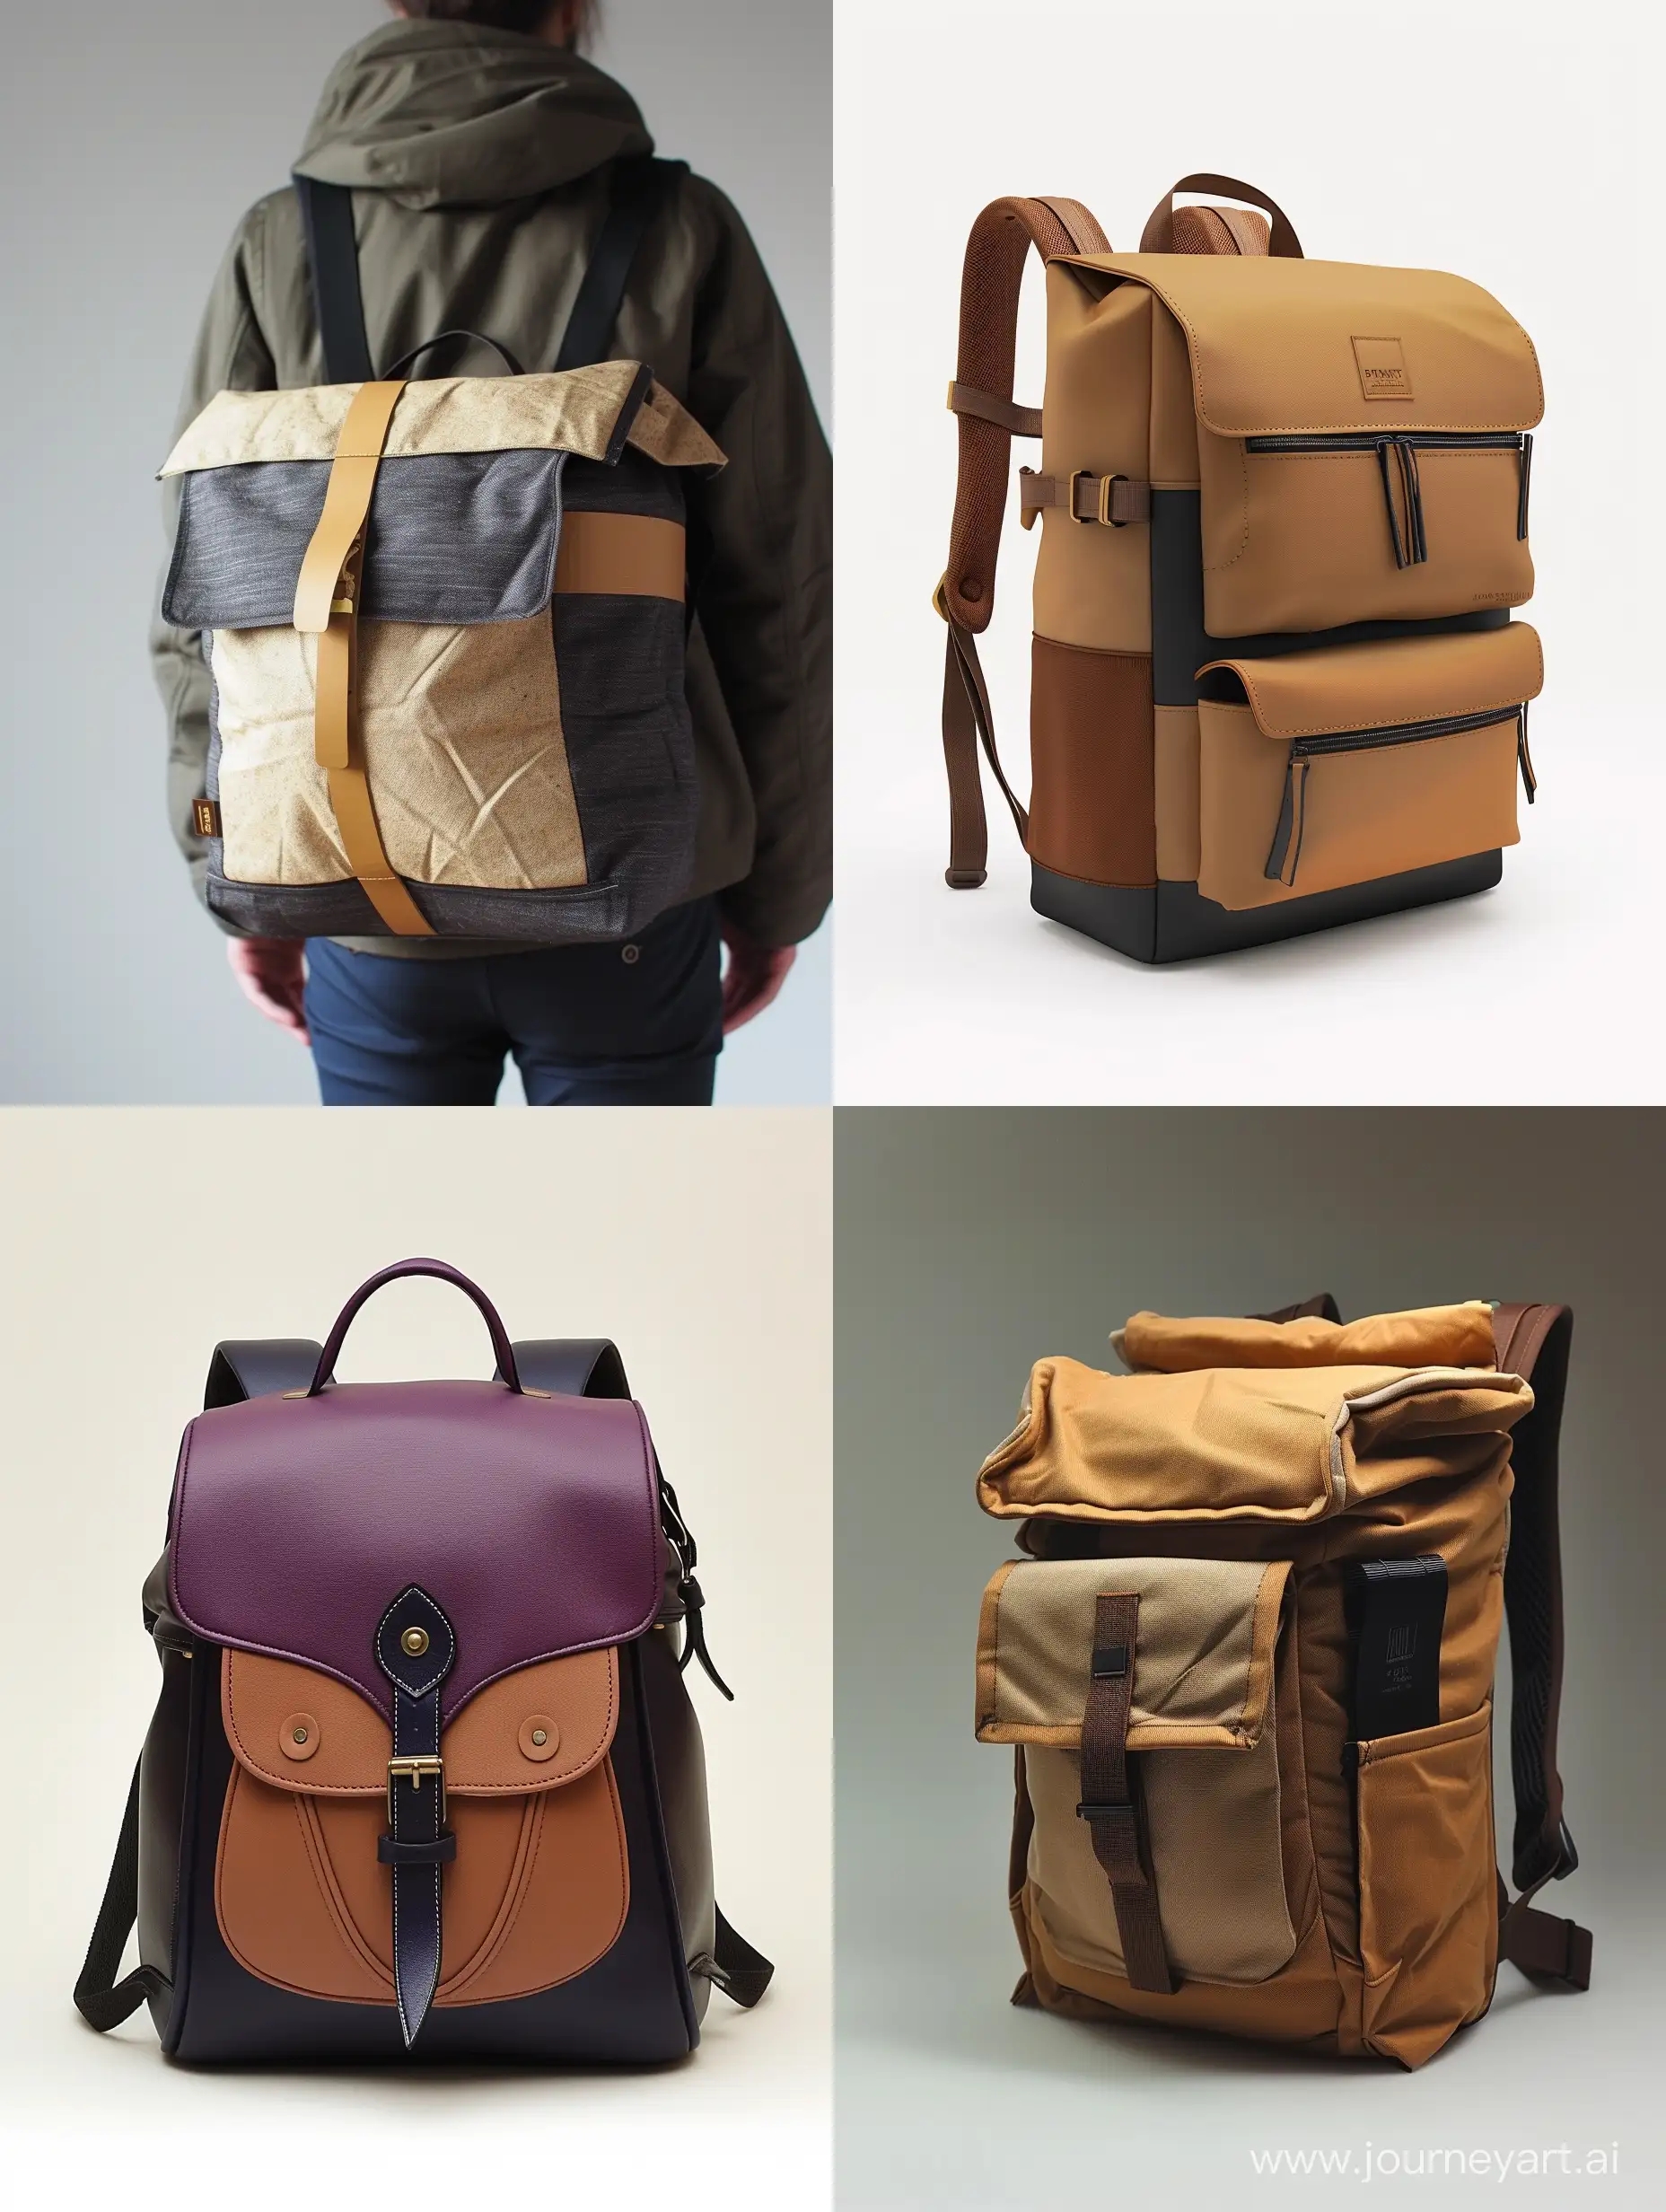 рюкзак дизайн, дизайн рюкзака, рюкзак стильный, моделирование рюкзака, рюкзак материал, рюкзак карман